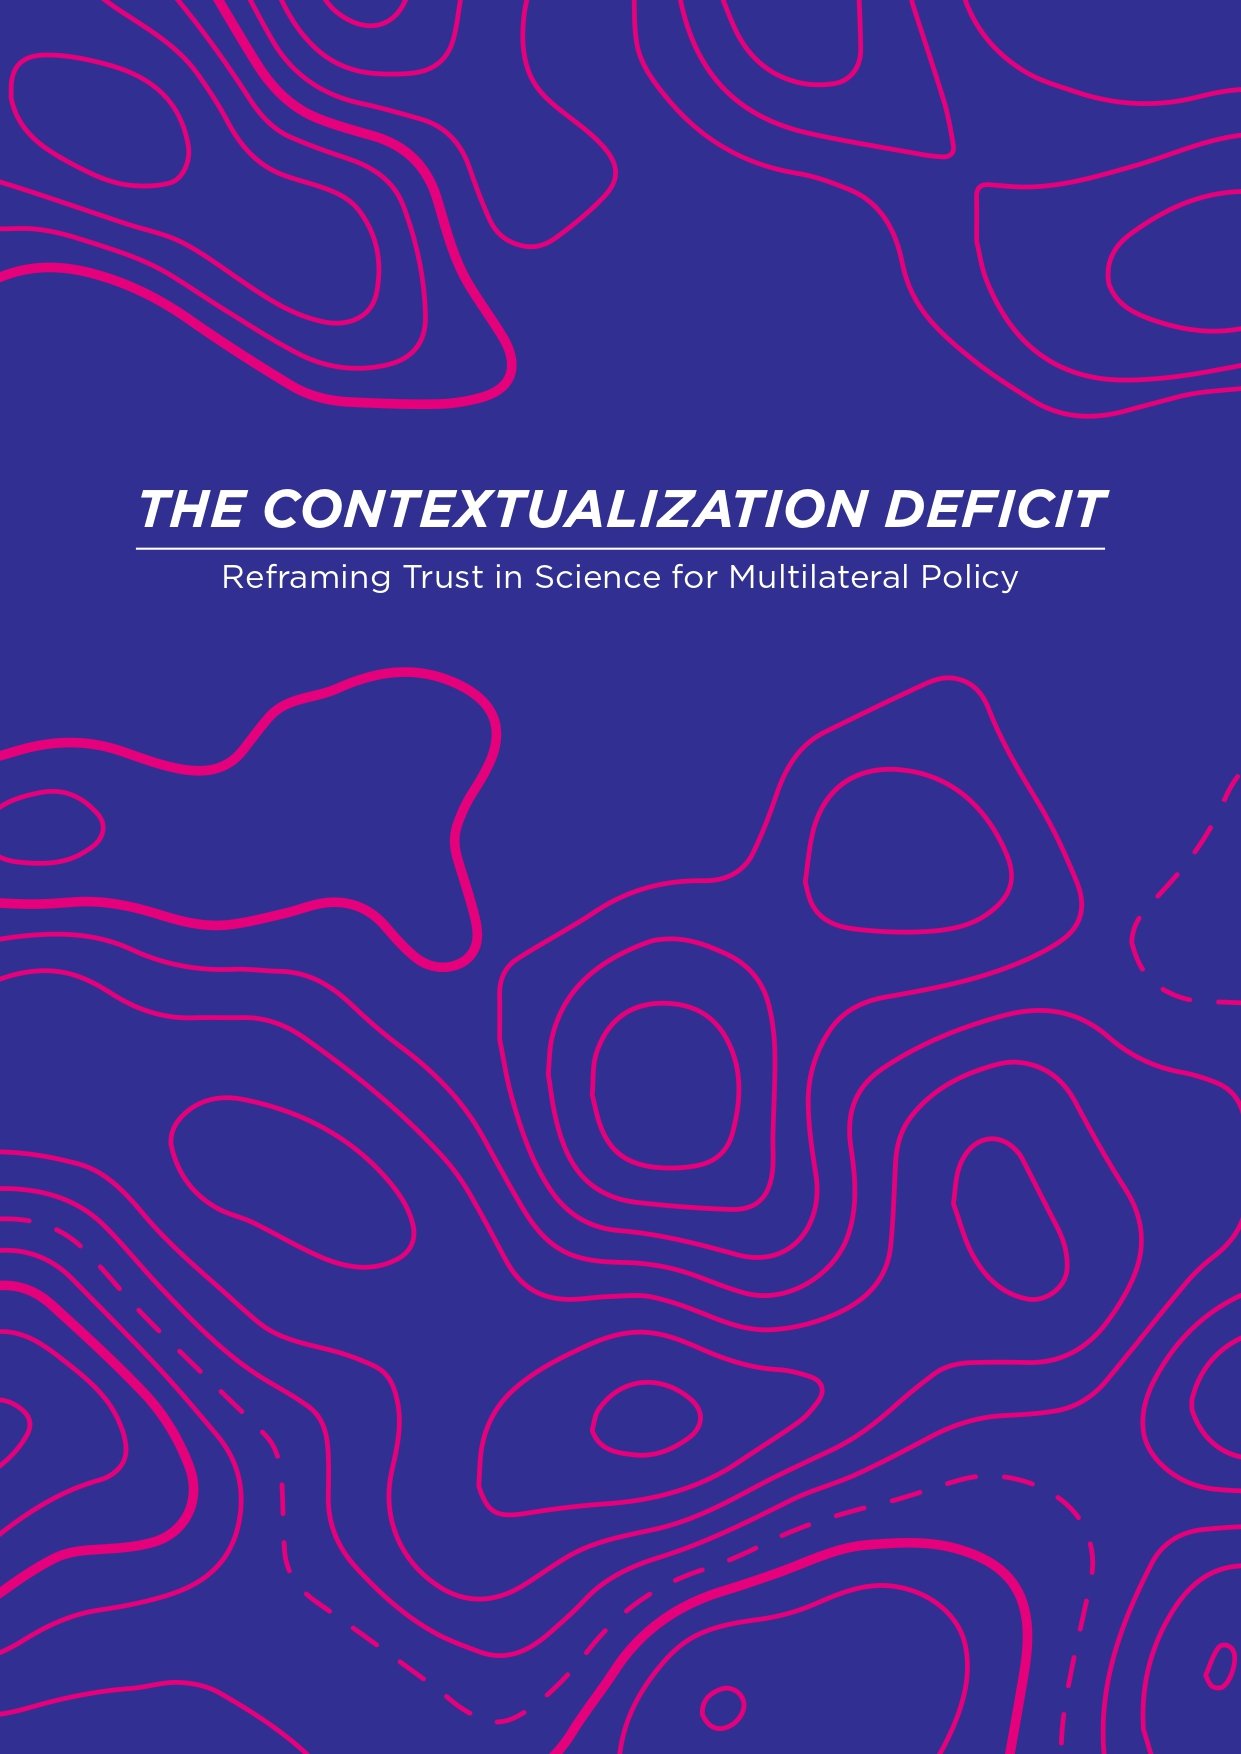 Portad del informe "The Contextualization Deficit"